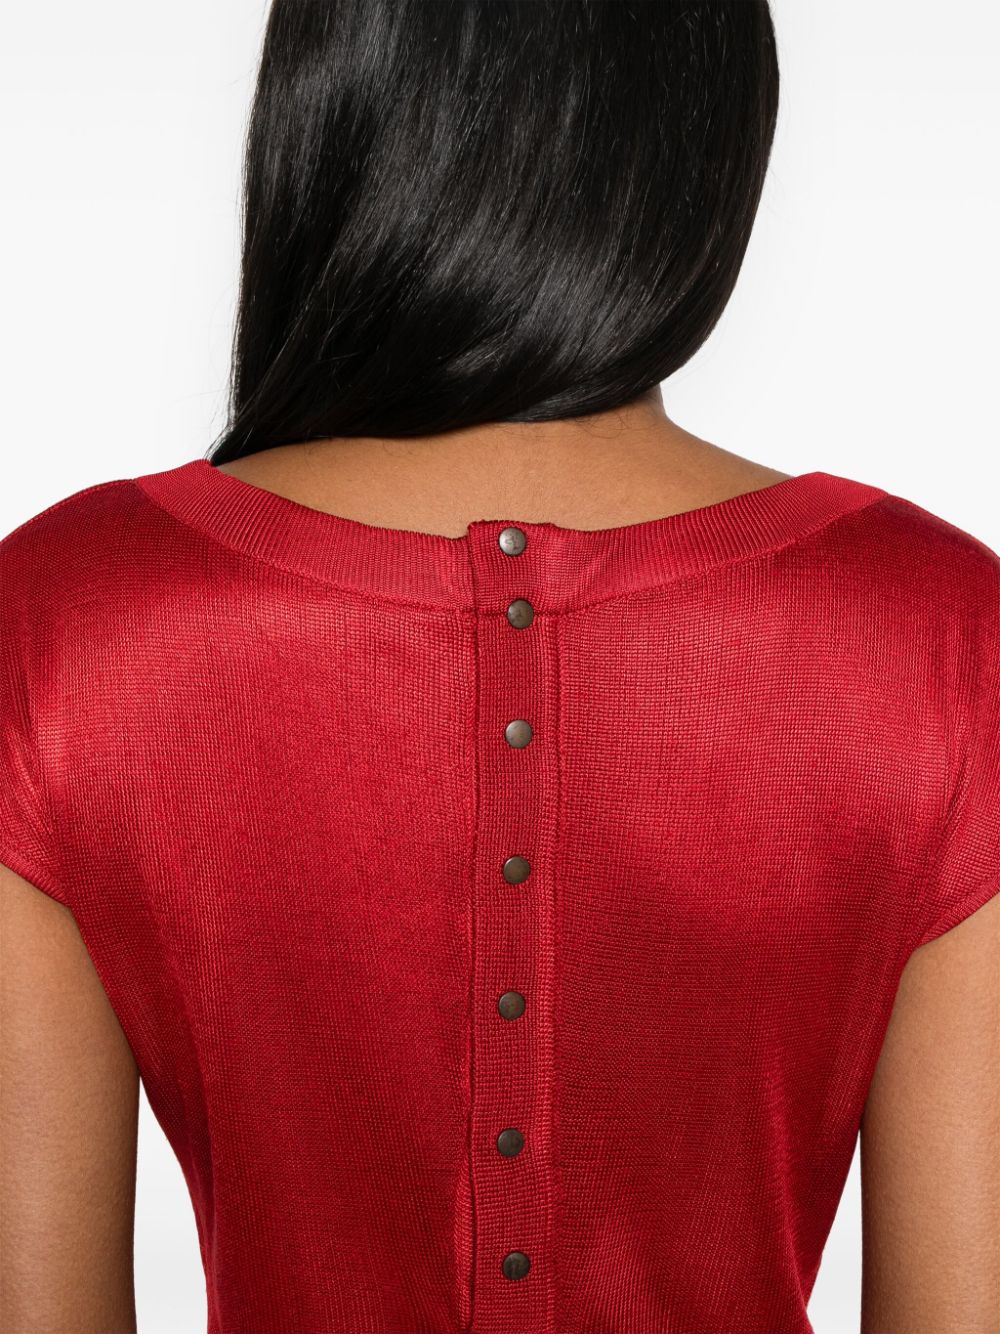 Pre-owned Alaïa 金属感效果针织西装套装 In Red